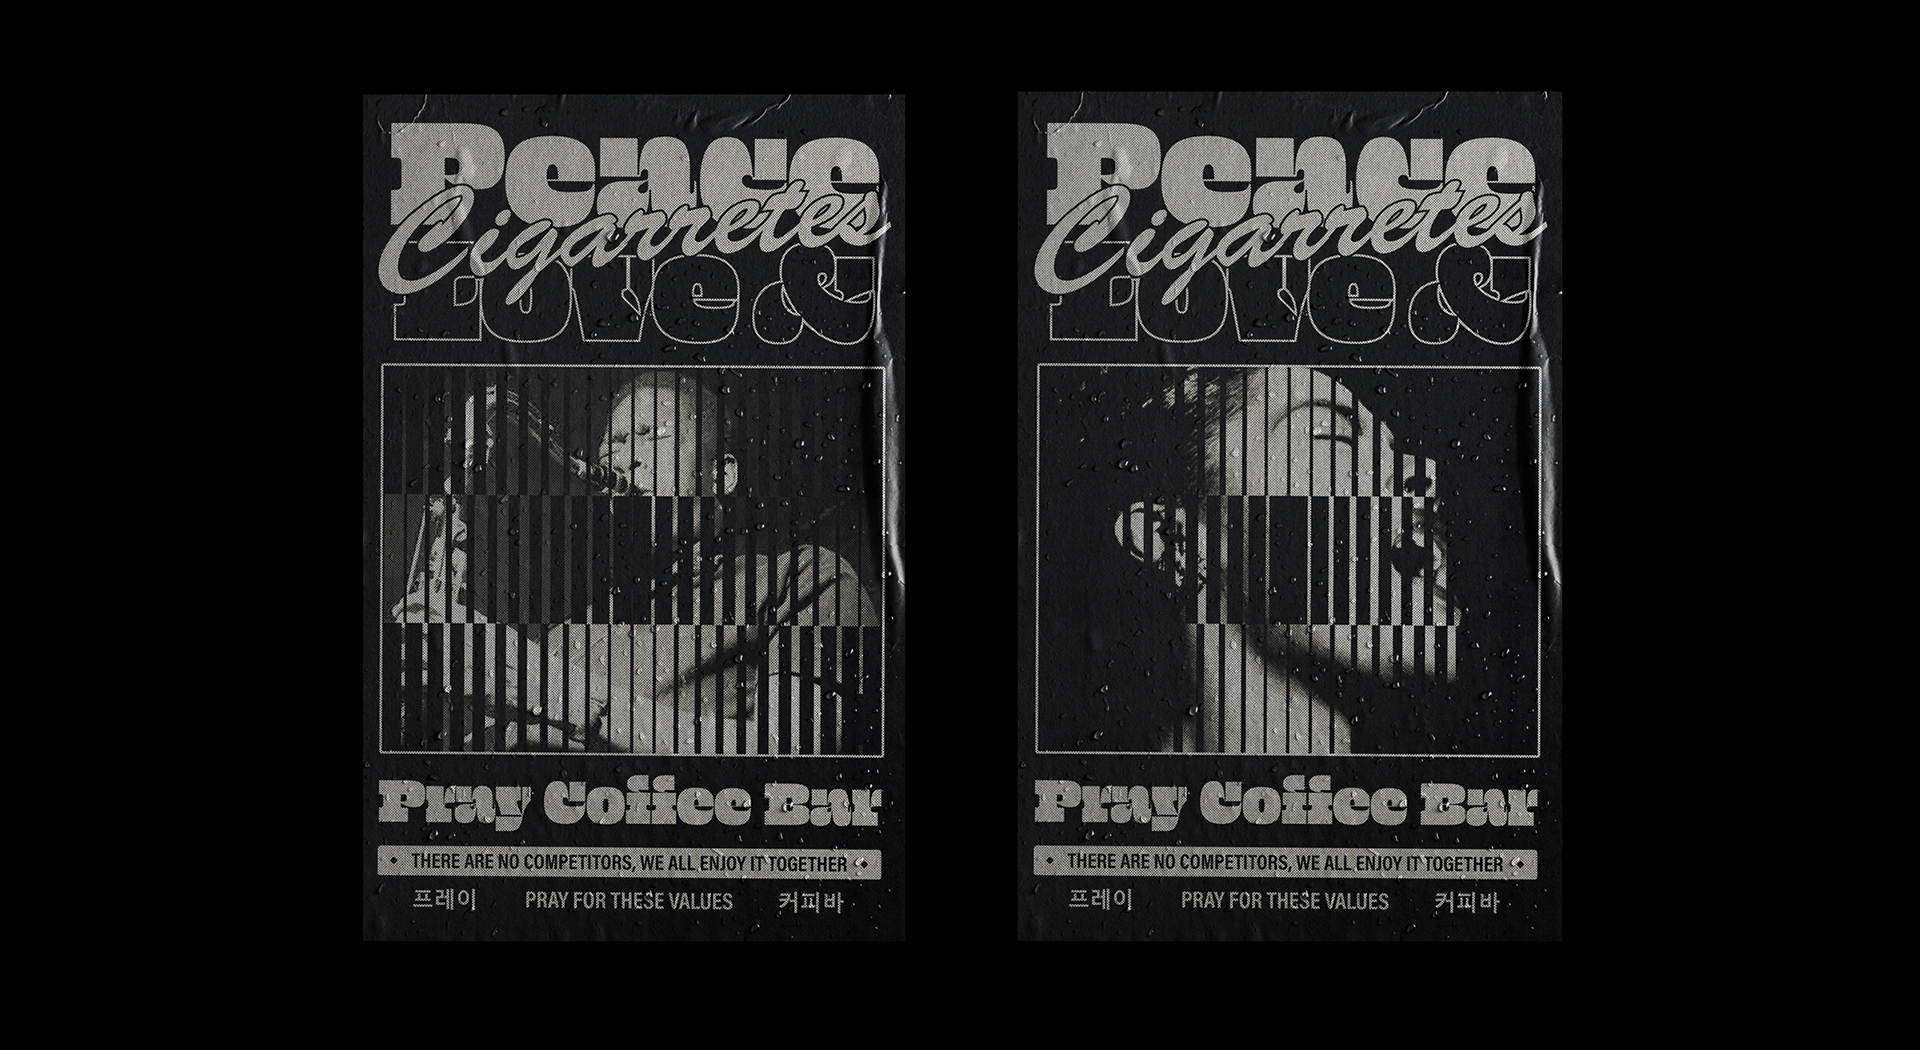 Monga Design Creates The Brand Identity For Pray Coffee Bar